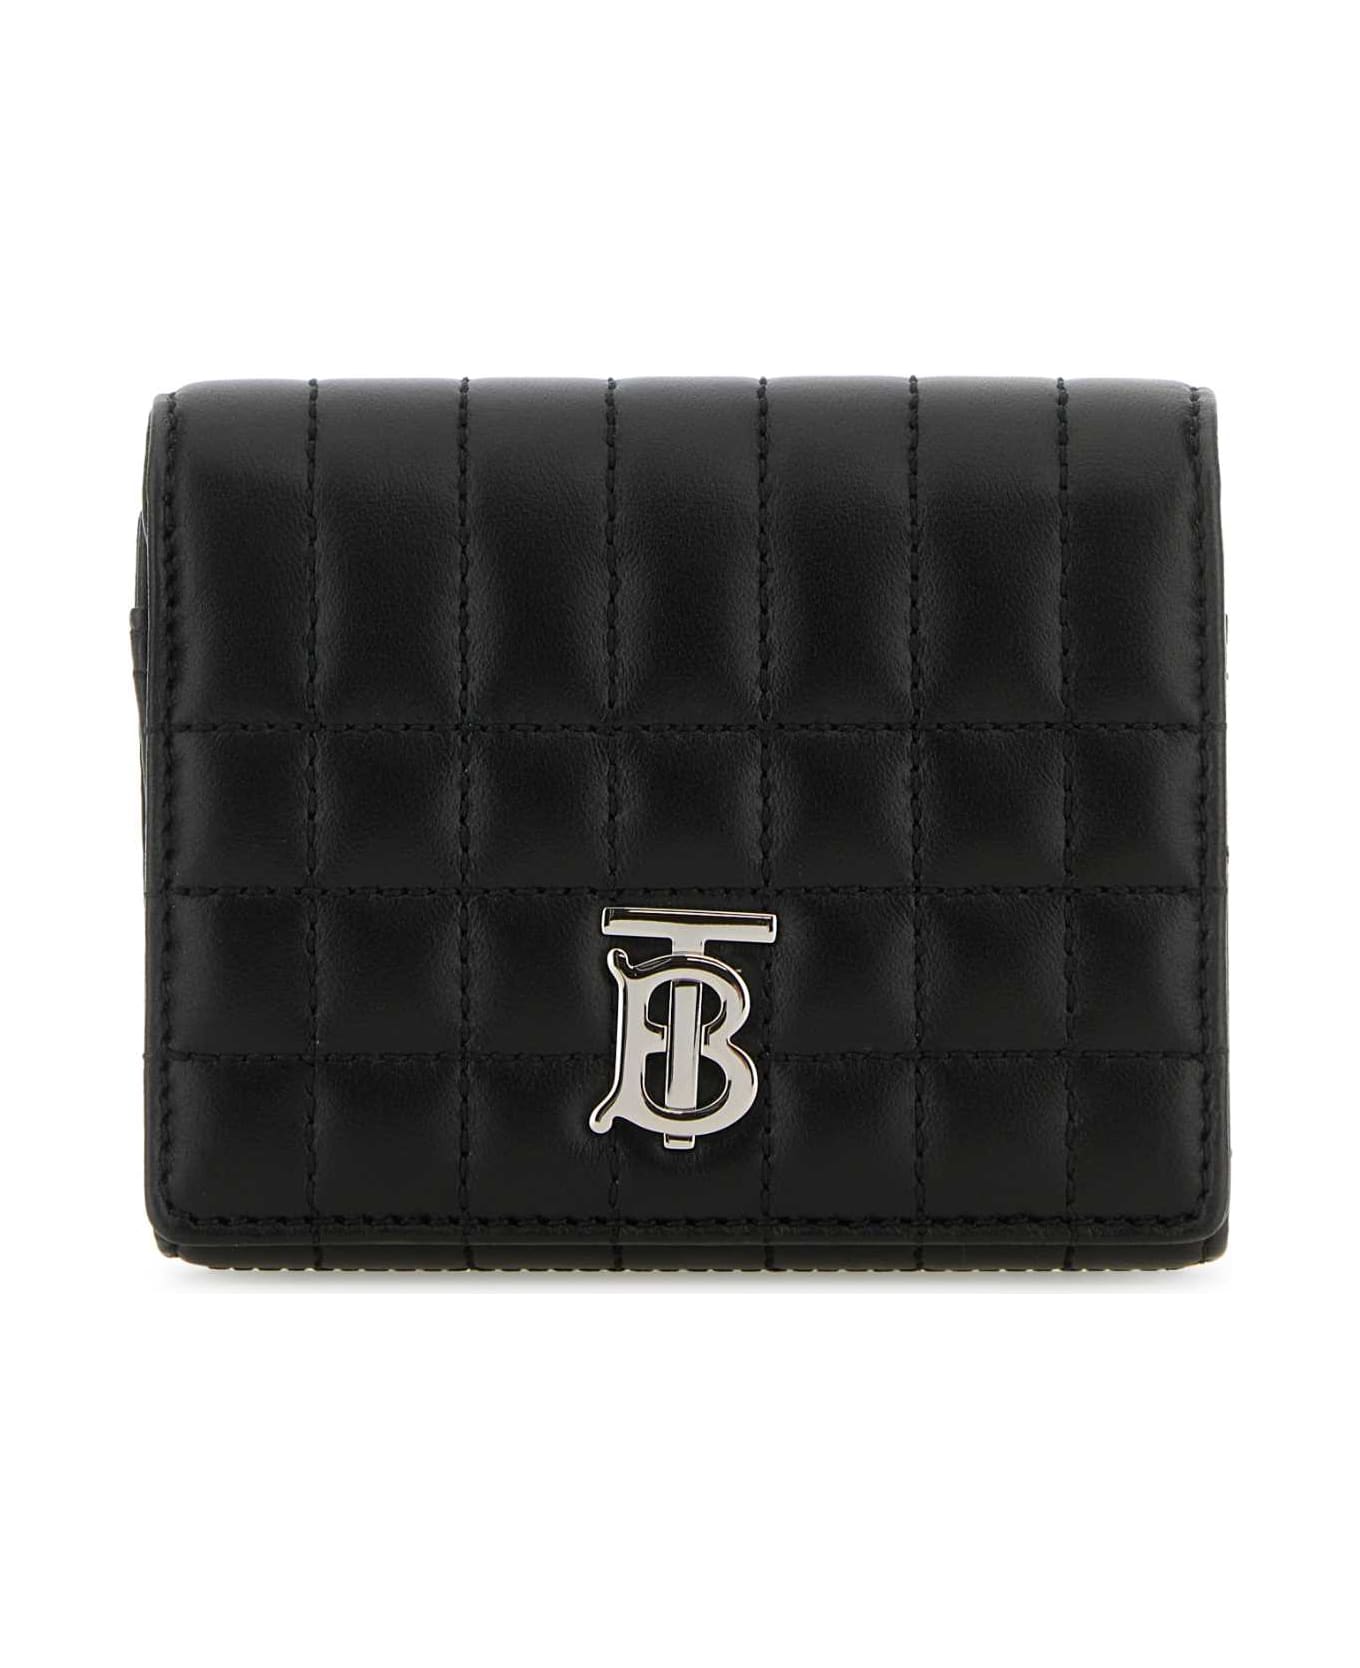 Burberry Black Leather Small Lola Wallet - BLACKPALLADIO